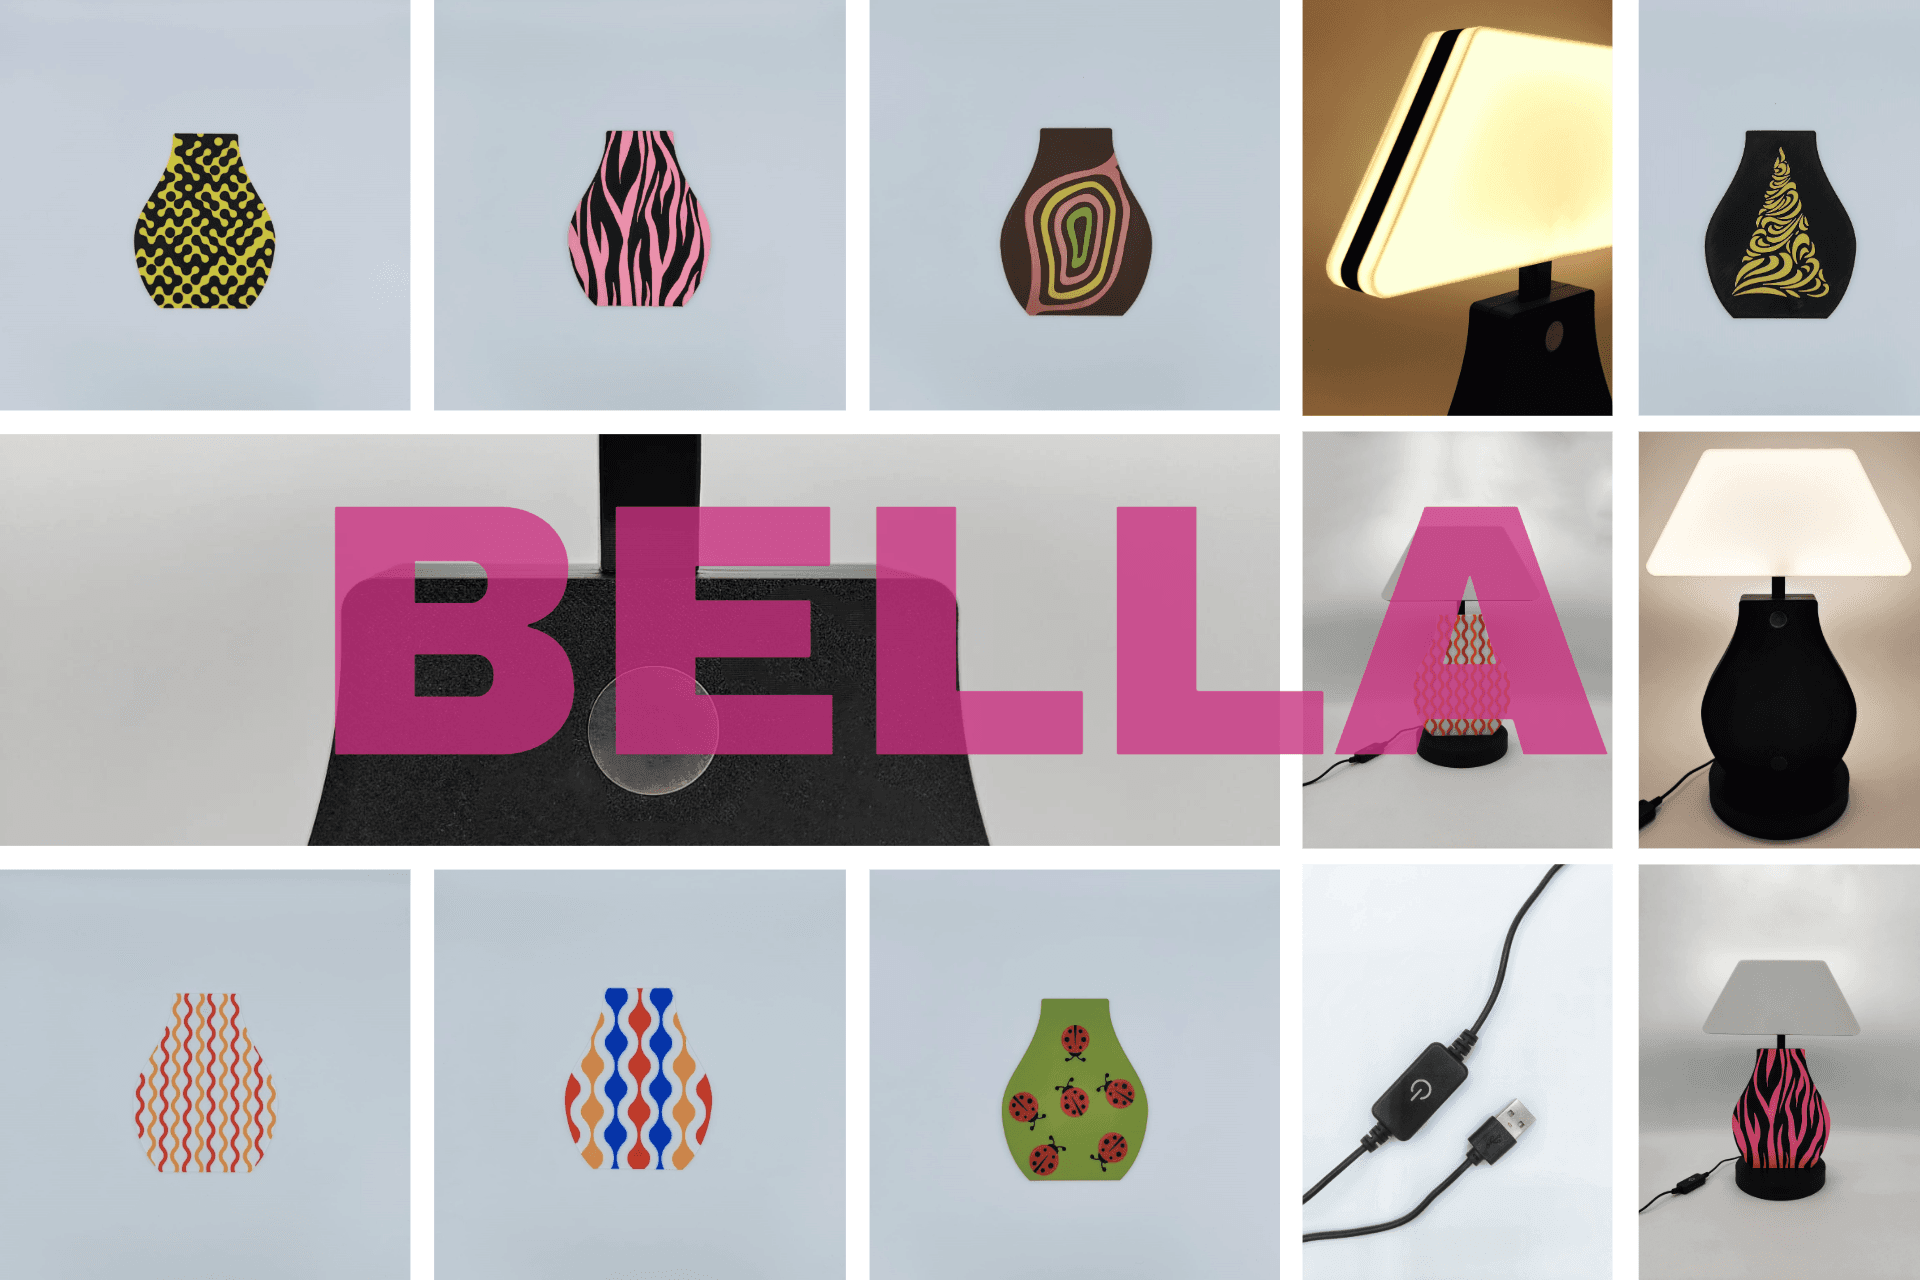 Bella is ready to illuminate your creativity